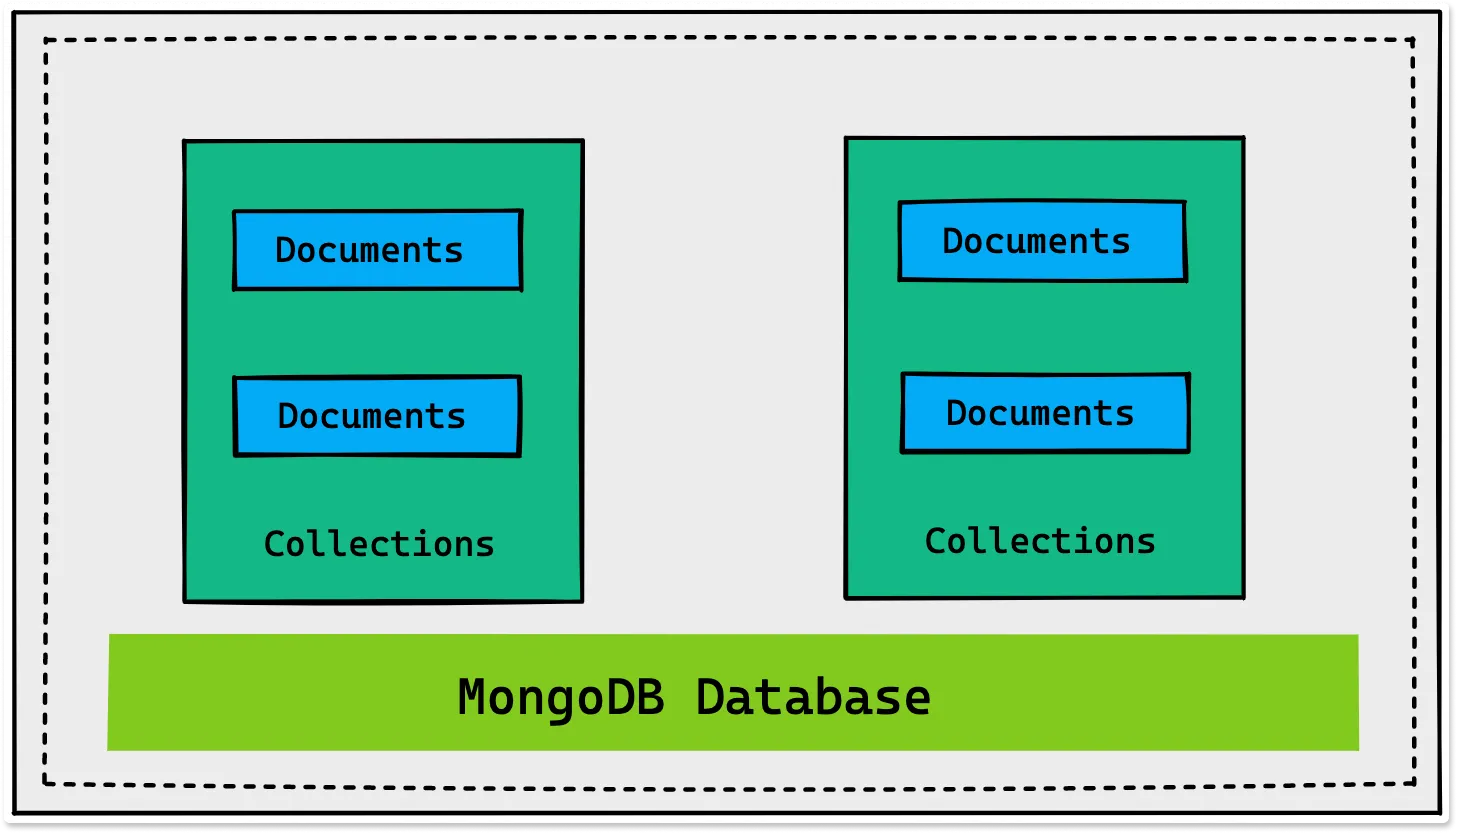 How data is stored in MongoDB databases